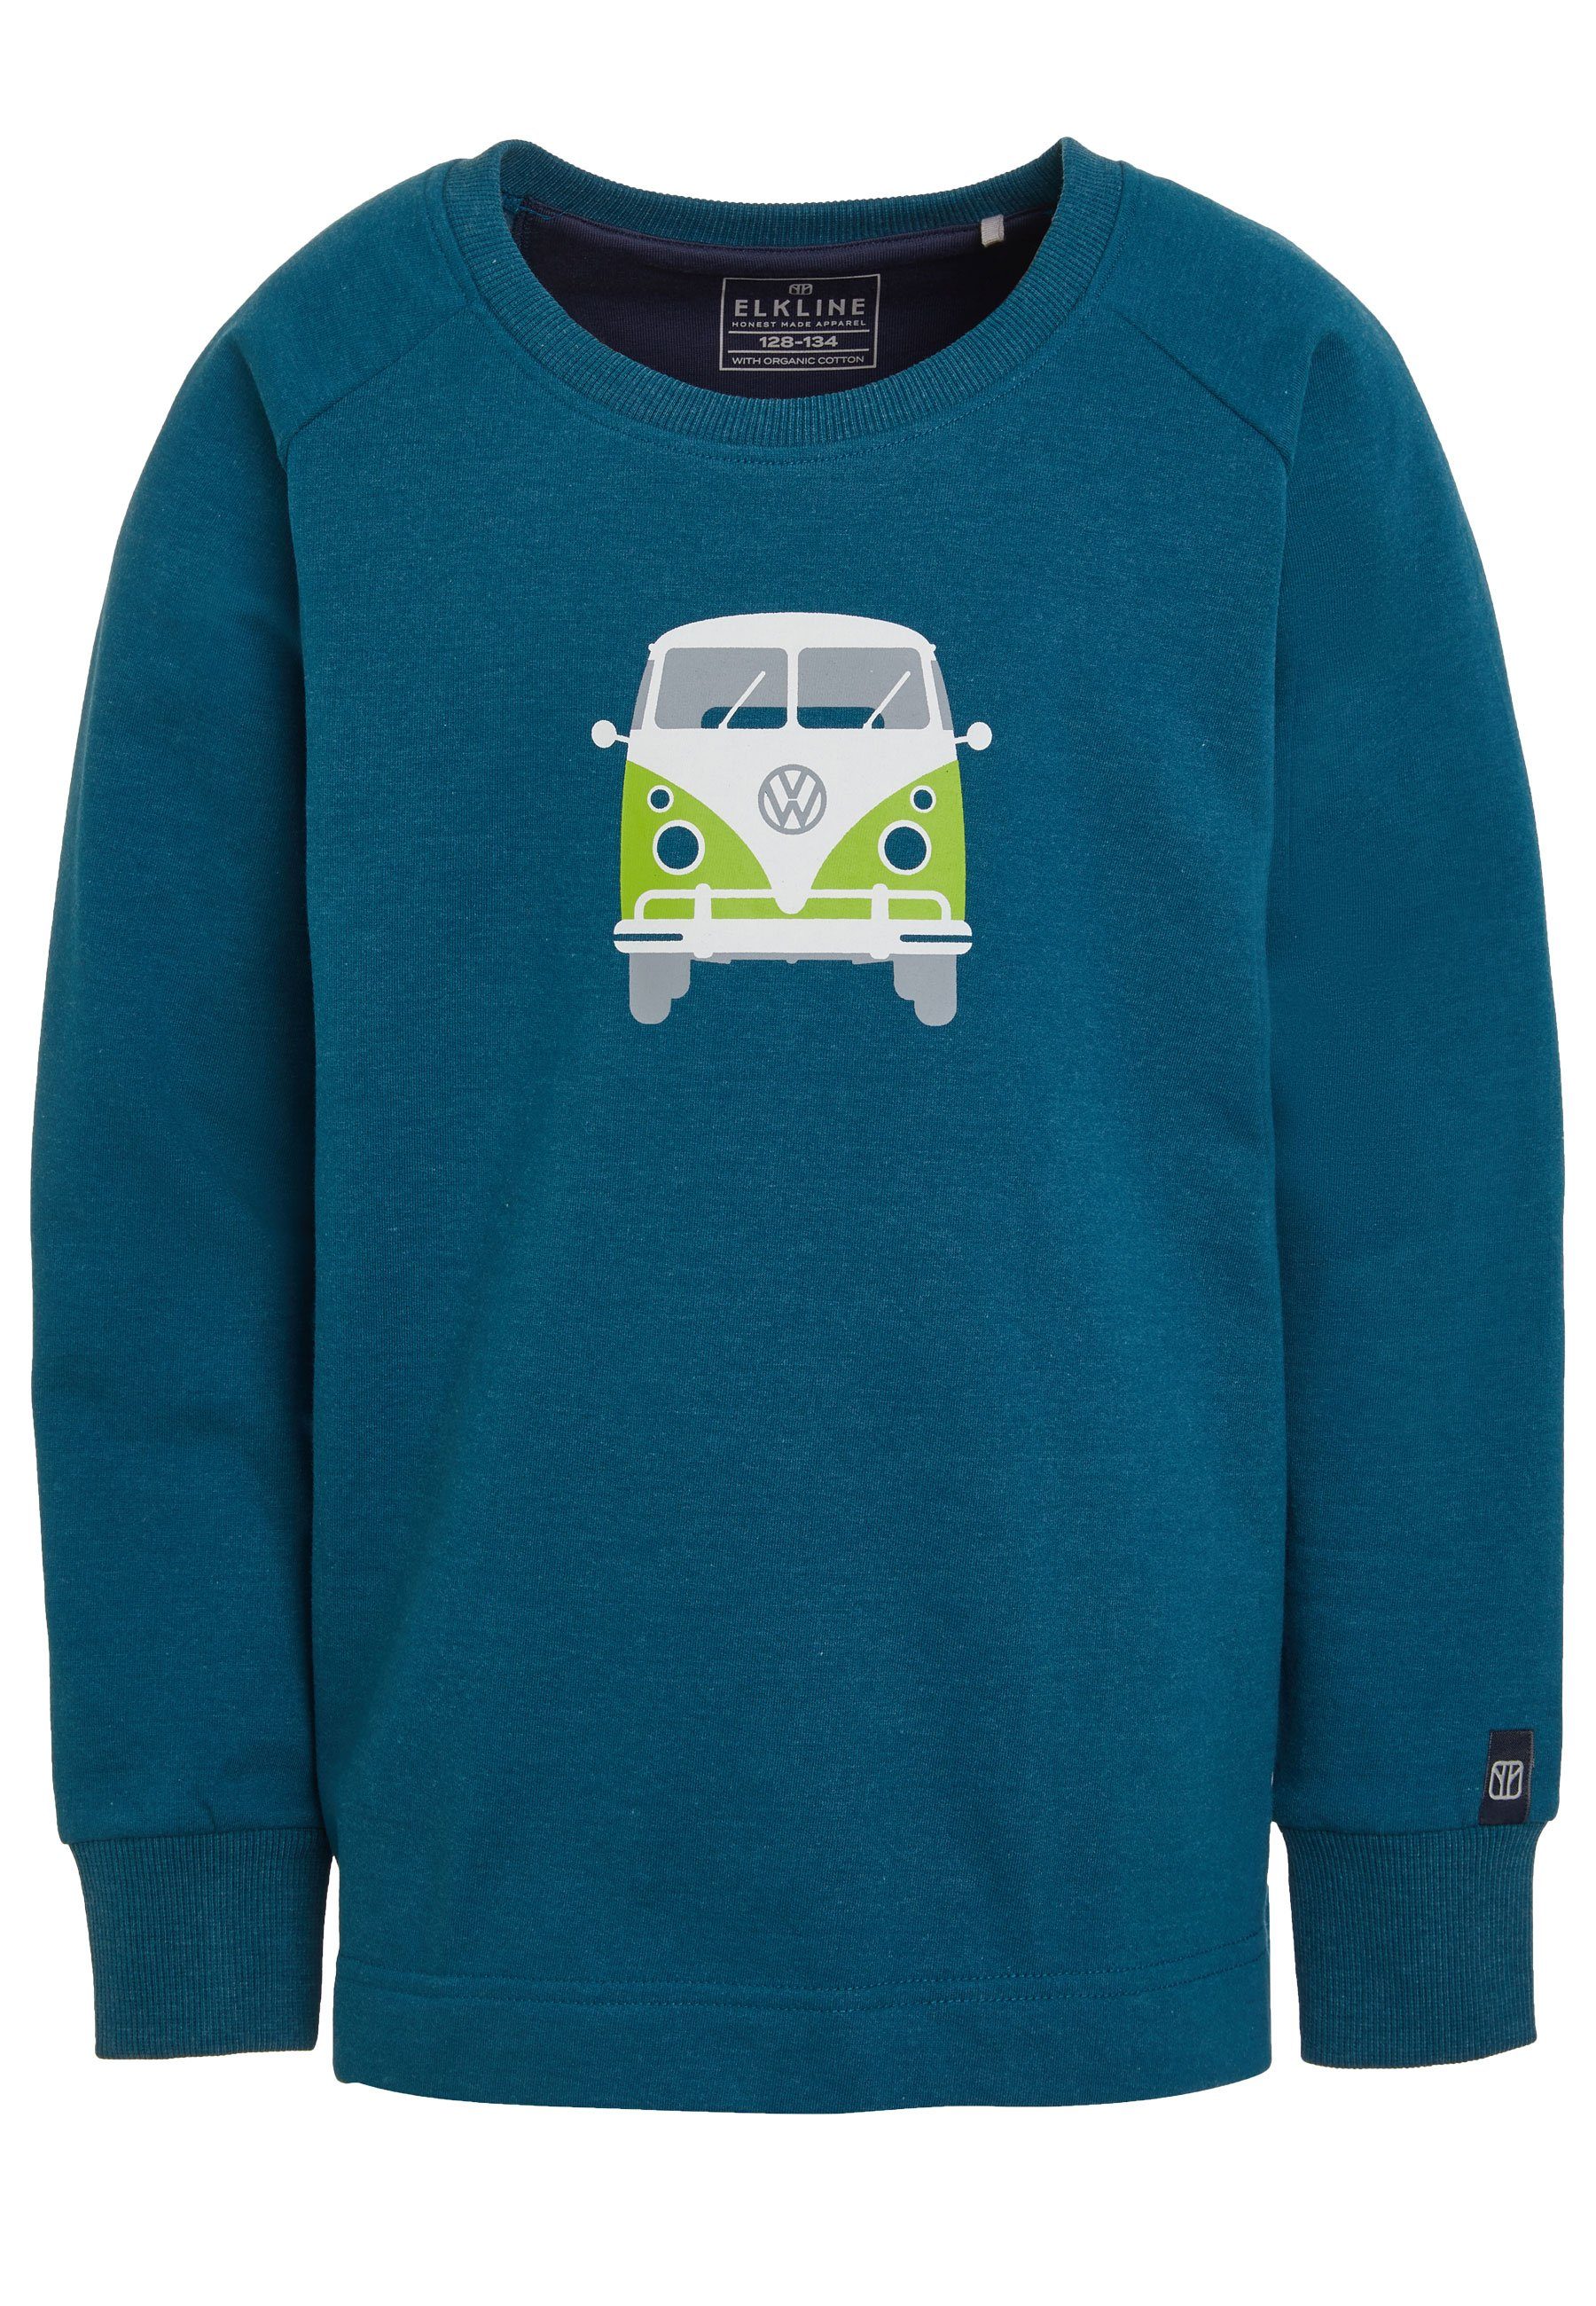 Bullibus Brust blue coral Bulli Sweatshirt Baumwolle Print VW Elkline Rücken